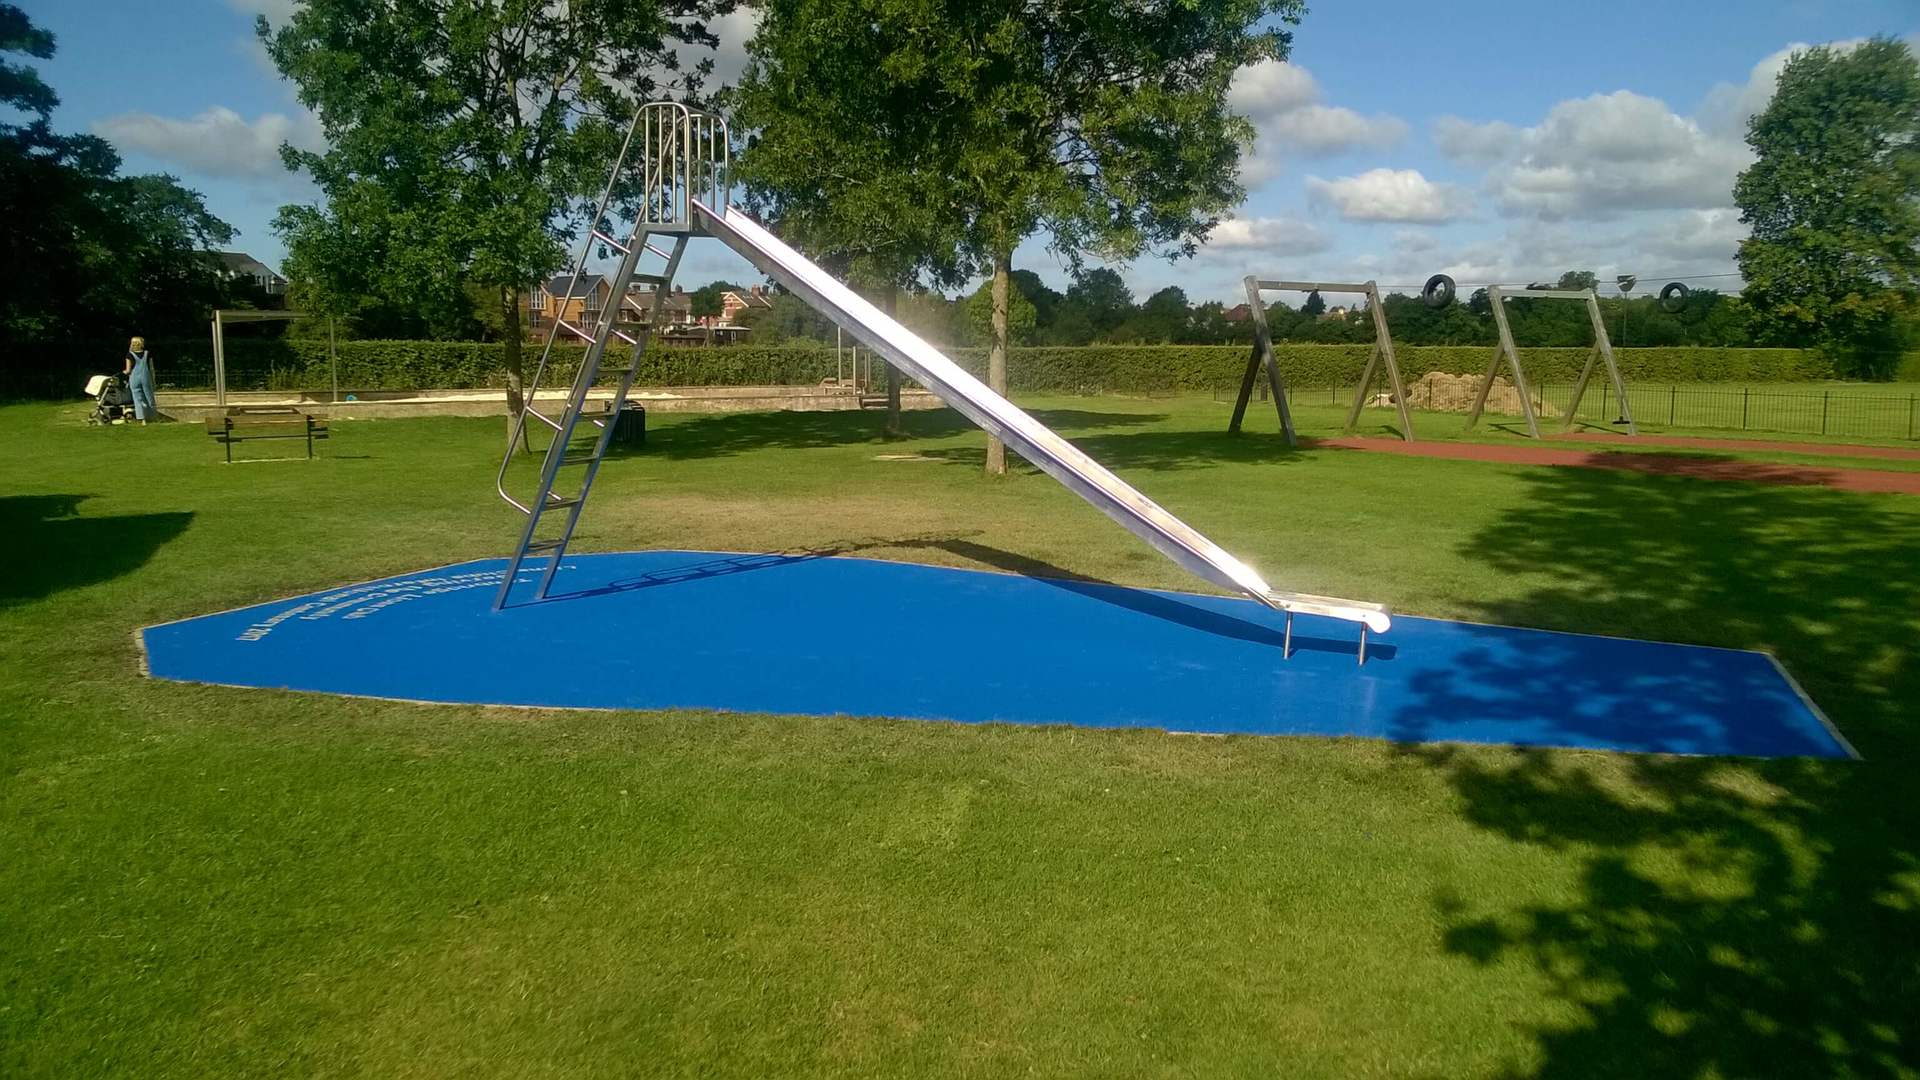 Outdoor Playground Slide